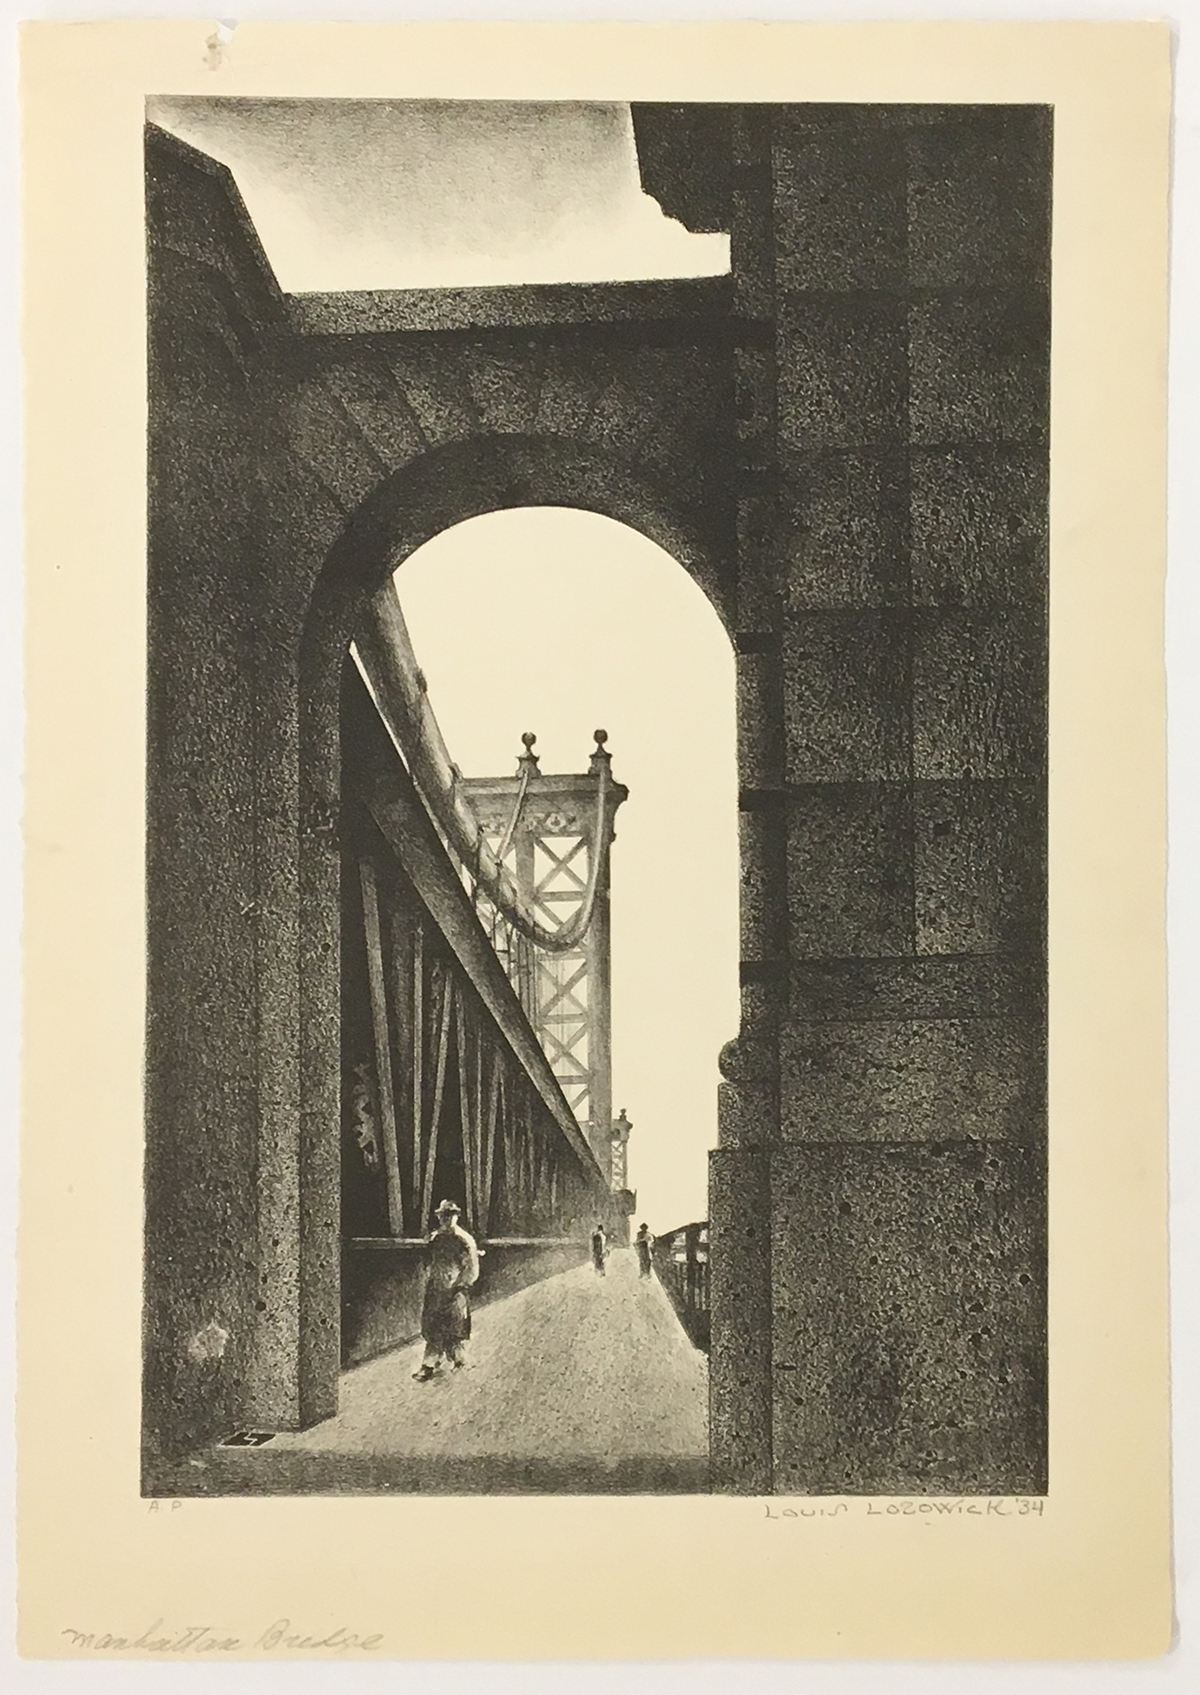 Louis Lozowick Manhattan Bridge Lithograph Image Dimensions: 12 13/16 x 8 3/8 inches (32.5 x 21.3 cm) Paper Dimensions: 15 3/16 x 10 5/8 inches (38.6 x 27 cm) Artist Proof